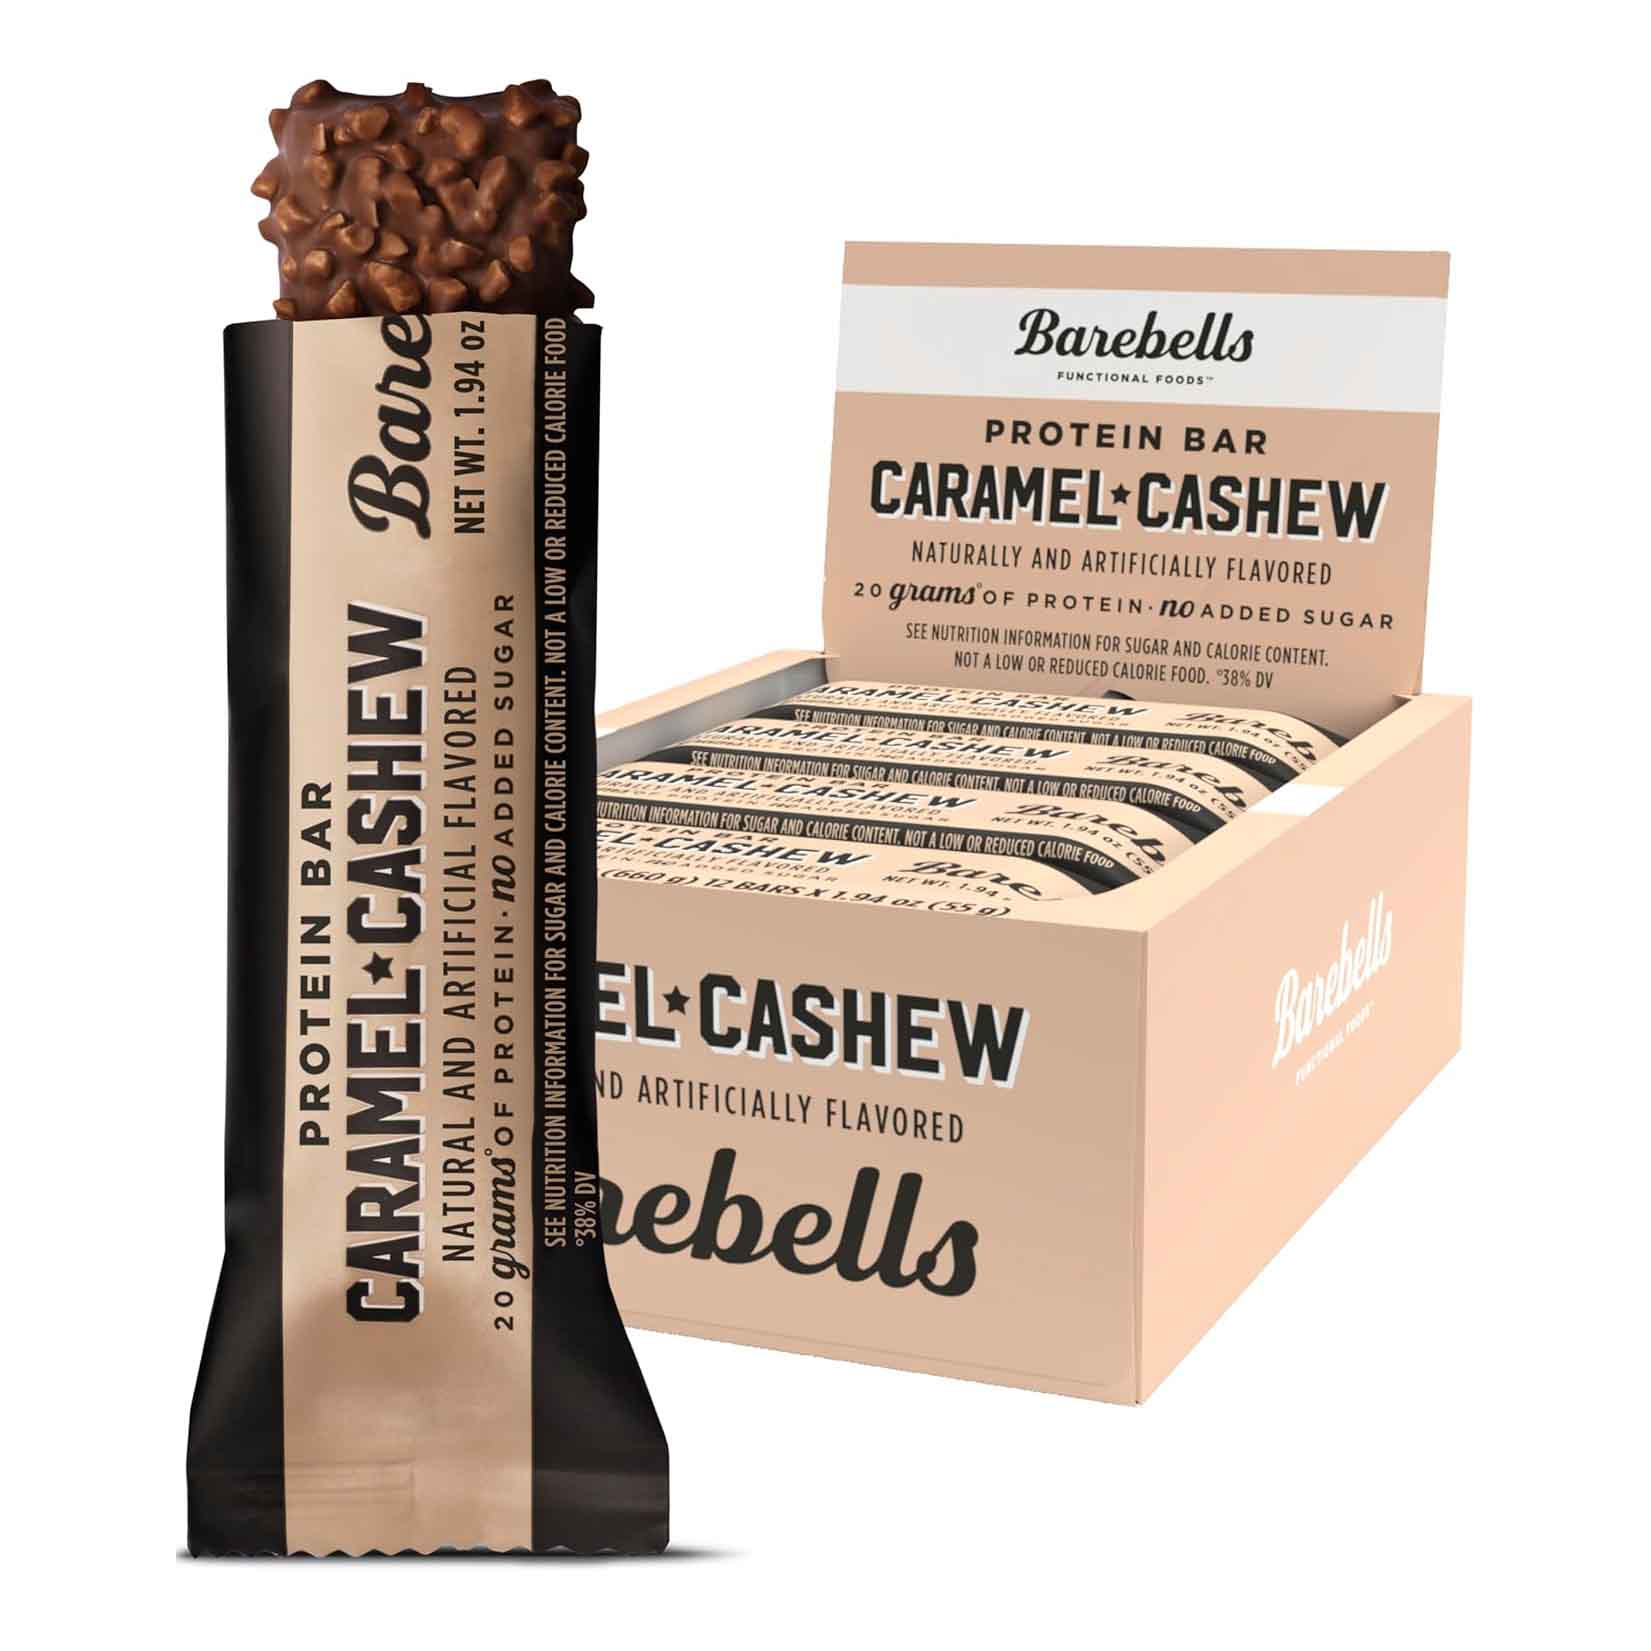 Barebells Protein Bars, Caramel Cashew in cream box